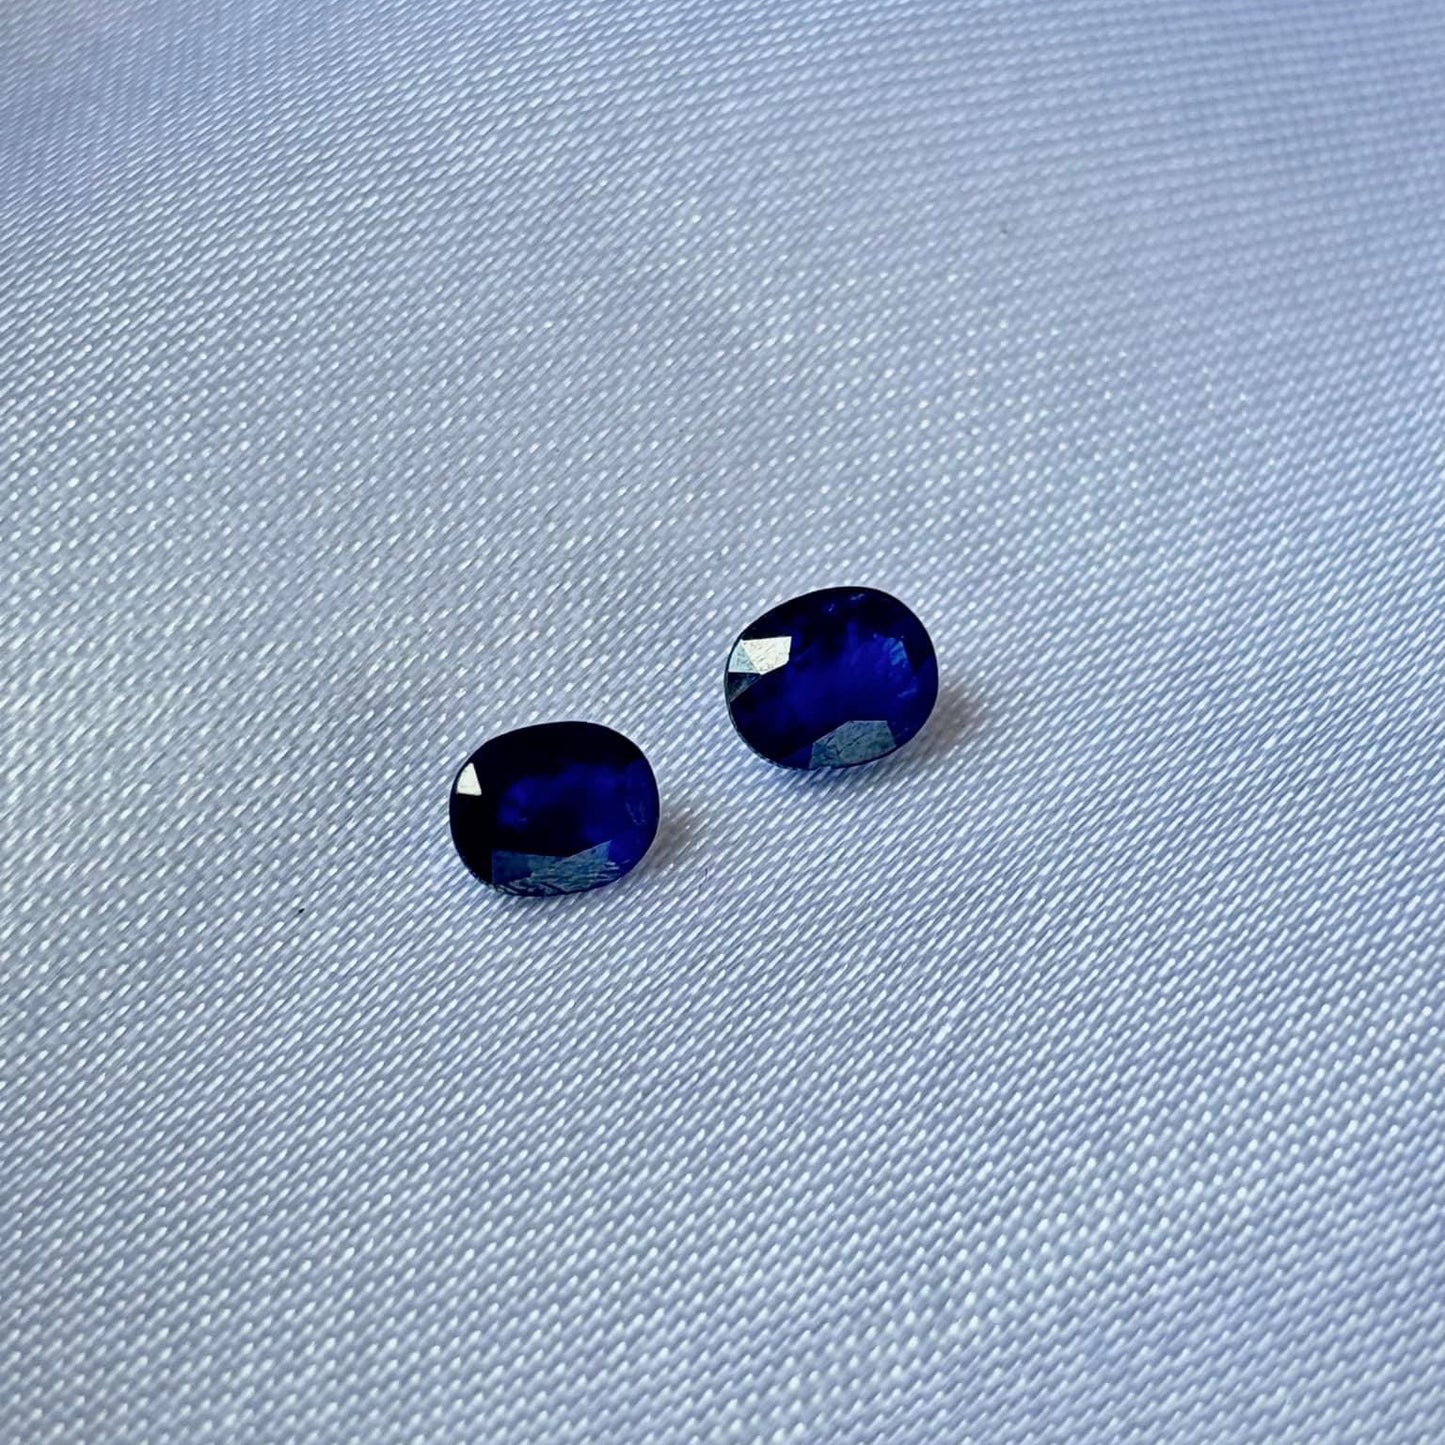 Buy natural blue sapphire, second grade  5 , 6 carats